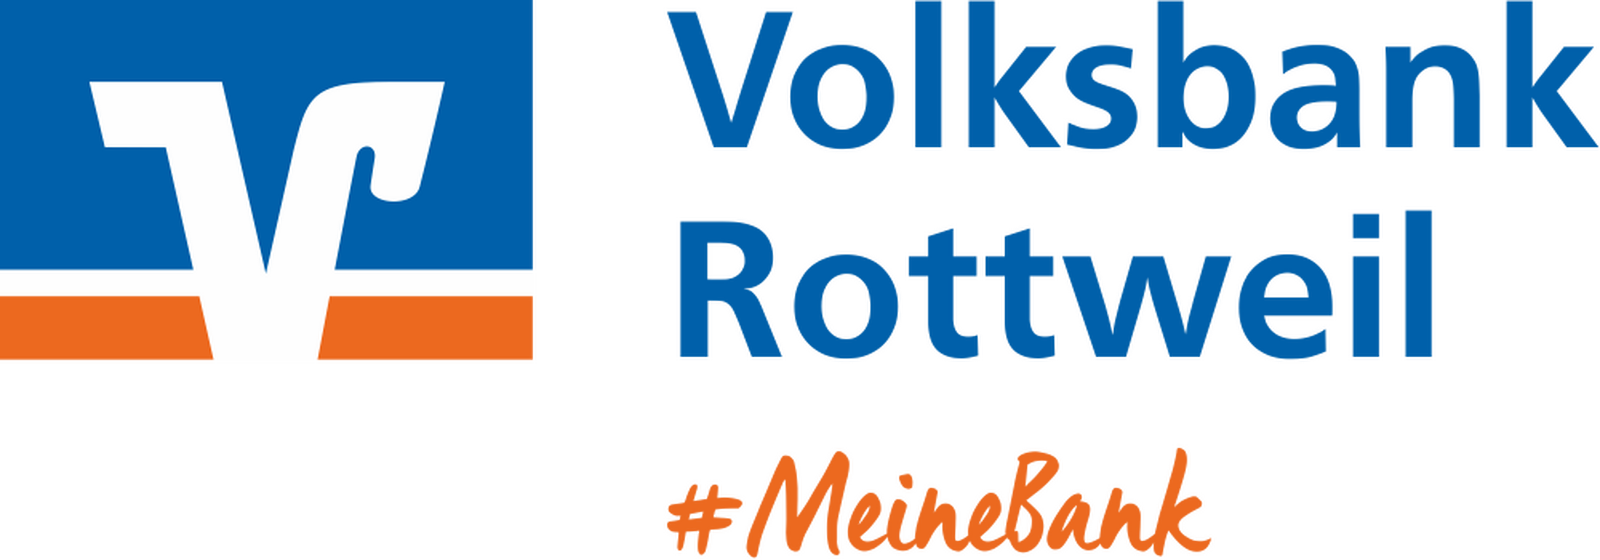 Logo Volksbank Rottweil 2Z L RGB 1000x350 Claim MeineBank